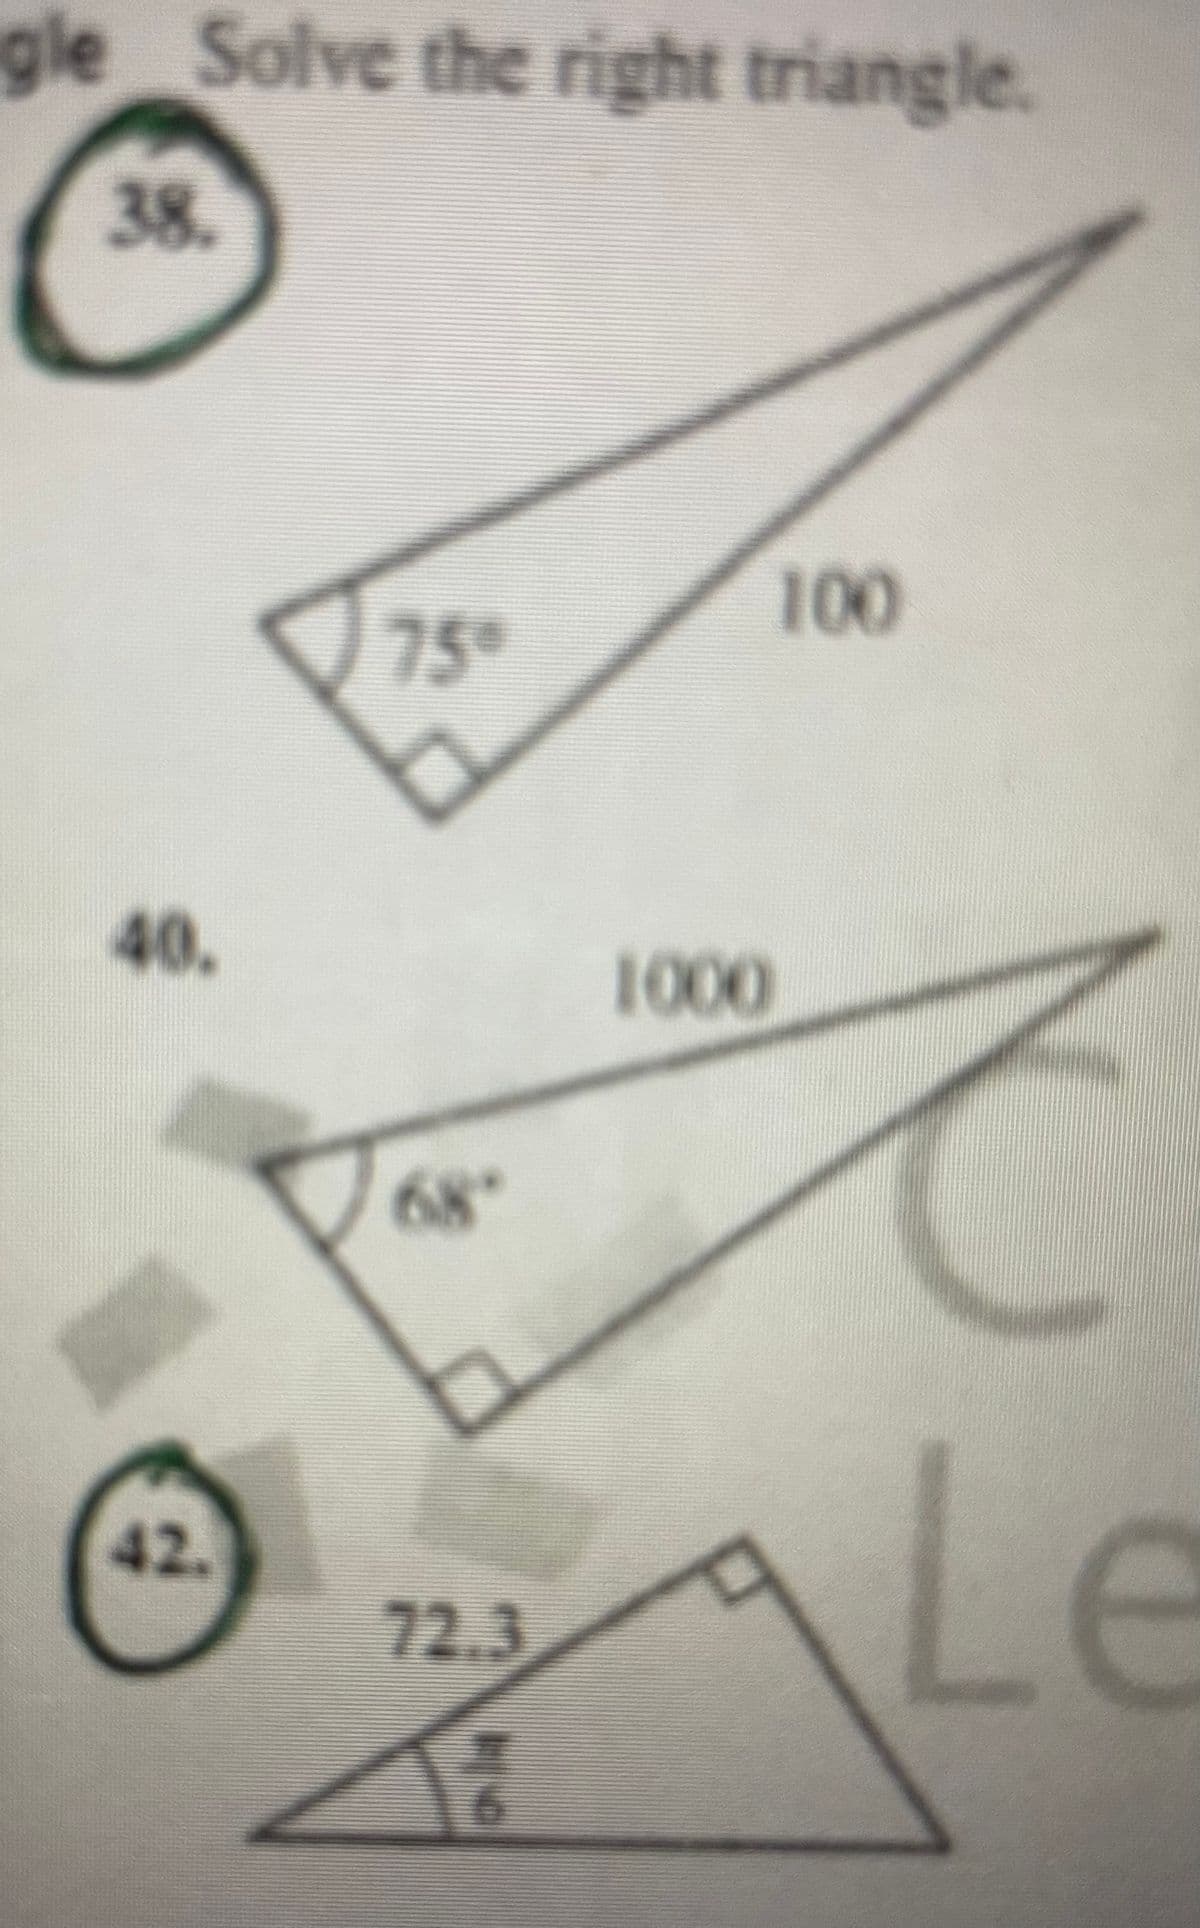 gle Solve the right triangle.
38.
100
75
40.
1000
Le
42.
72.3
